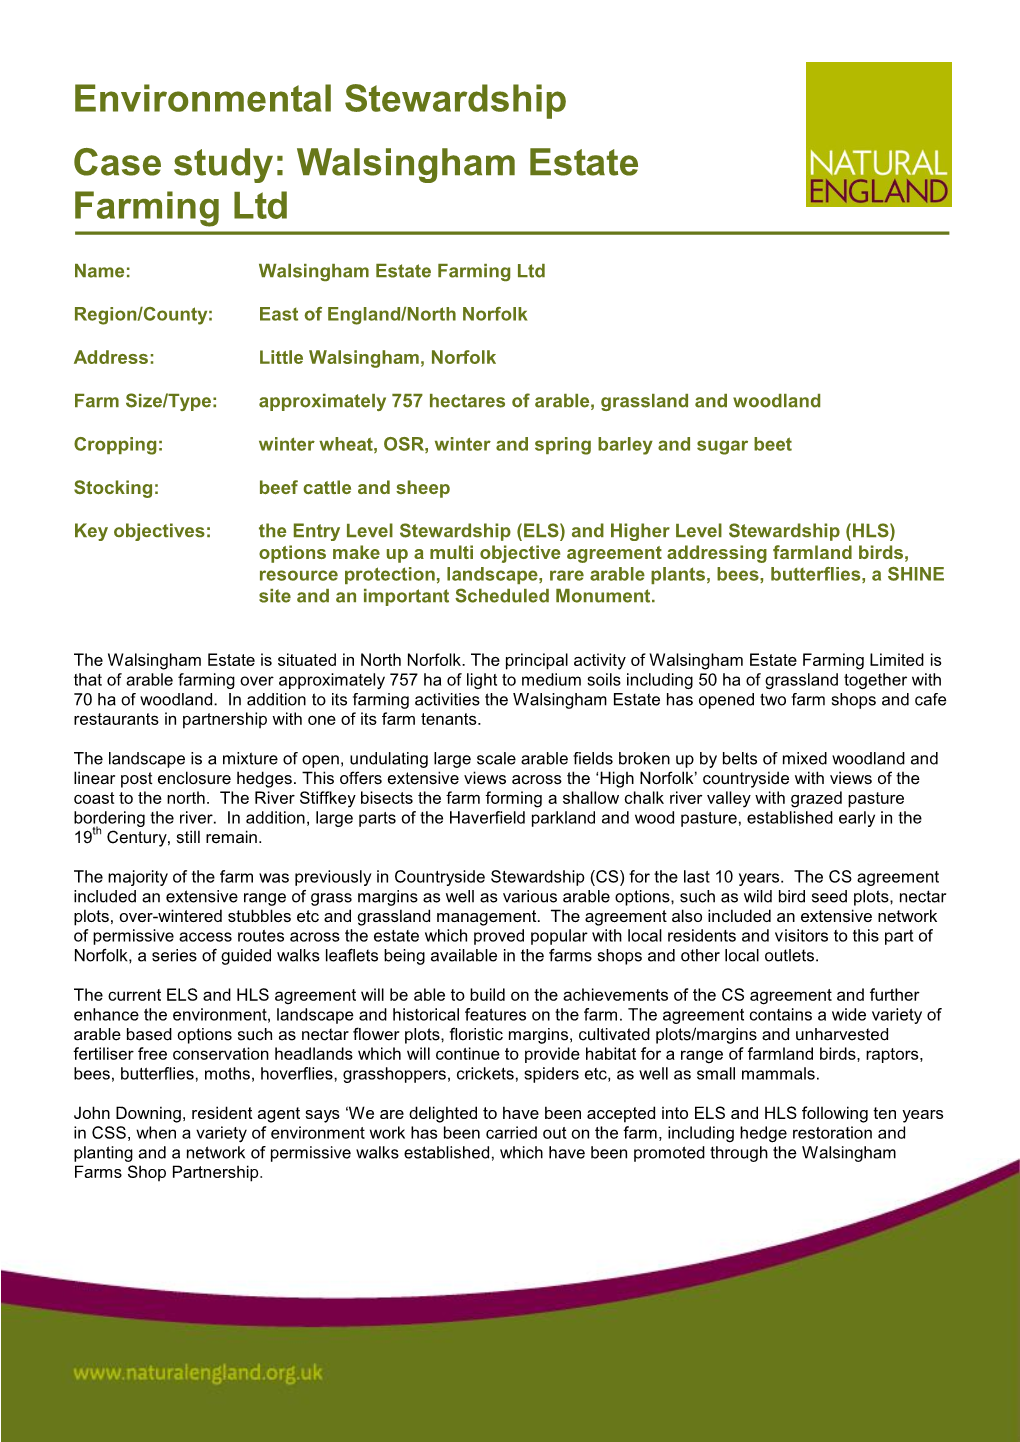 Environmental Stewardship Case Study: Walsingham Estate Farming